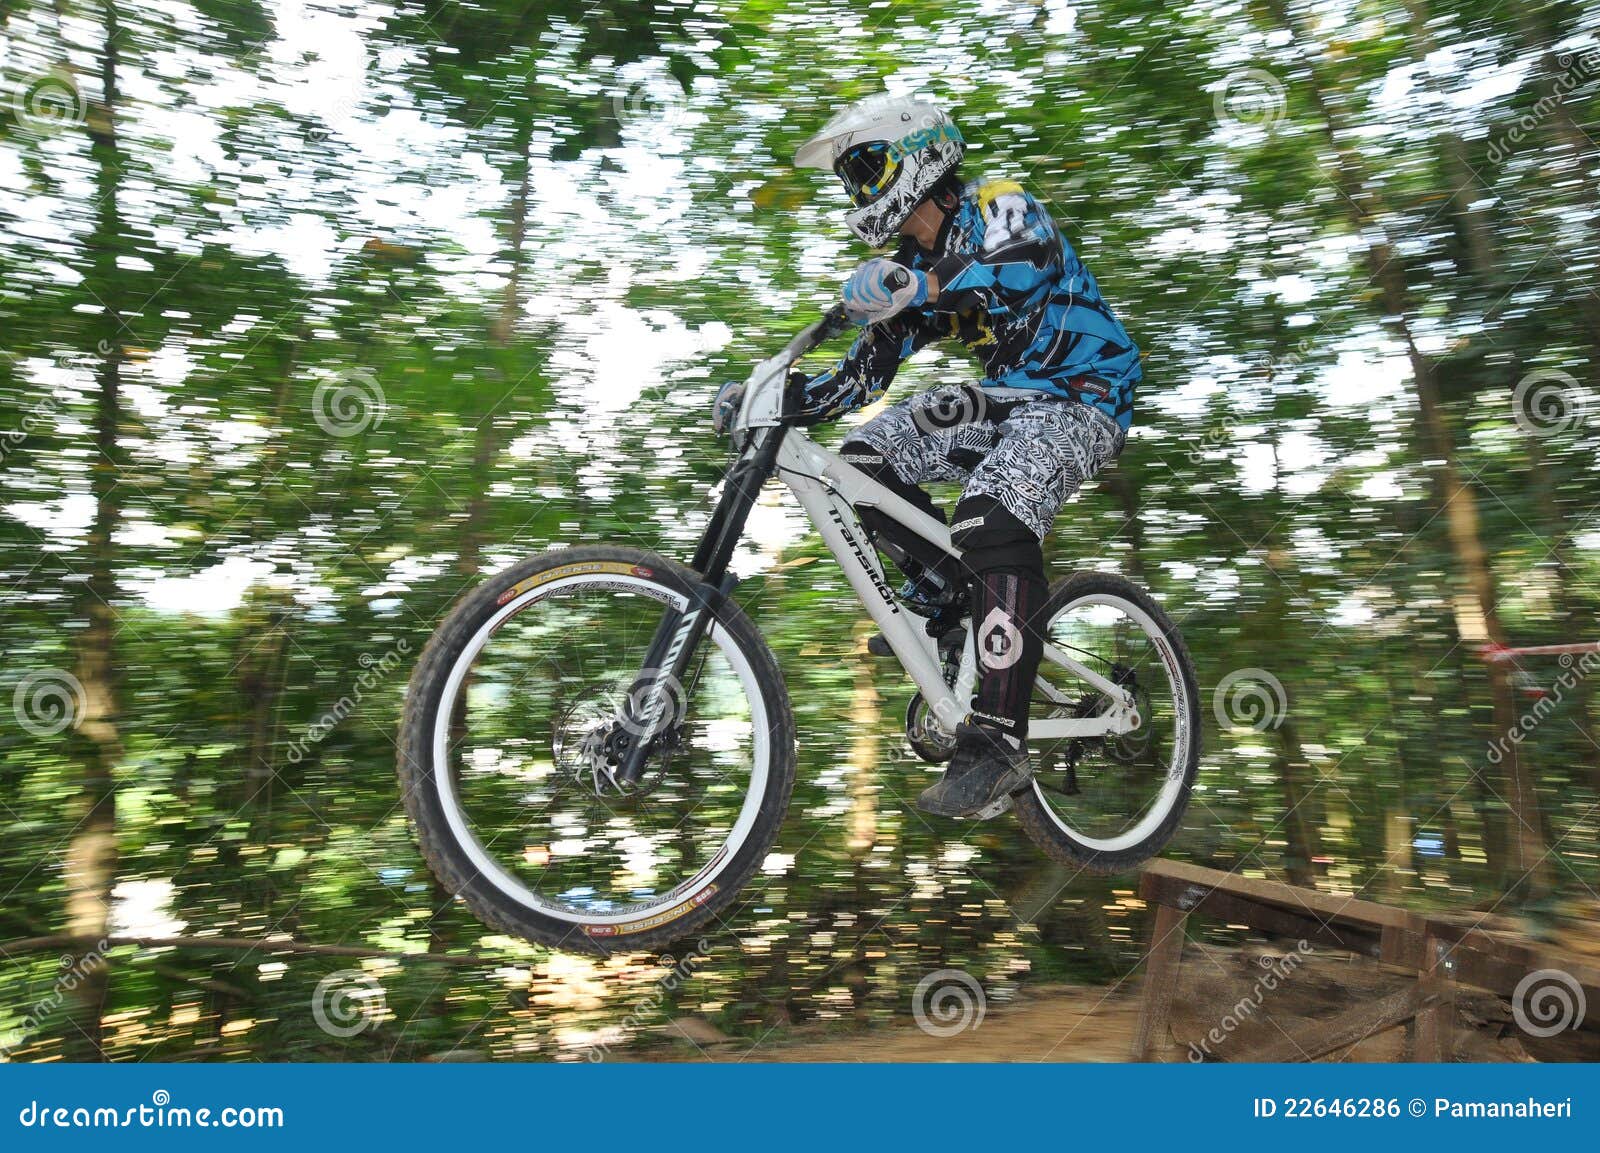 Downhill Mountain Bike Race Editorial Photo - Image of biker, fast: 22646286